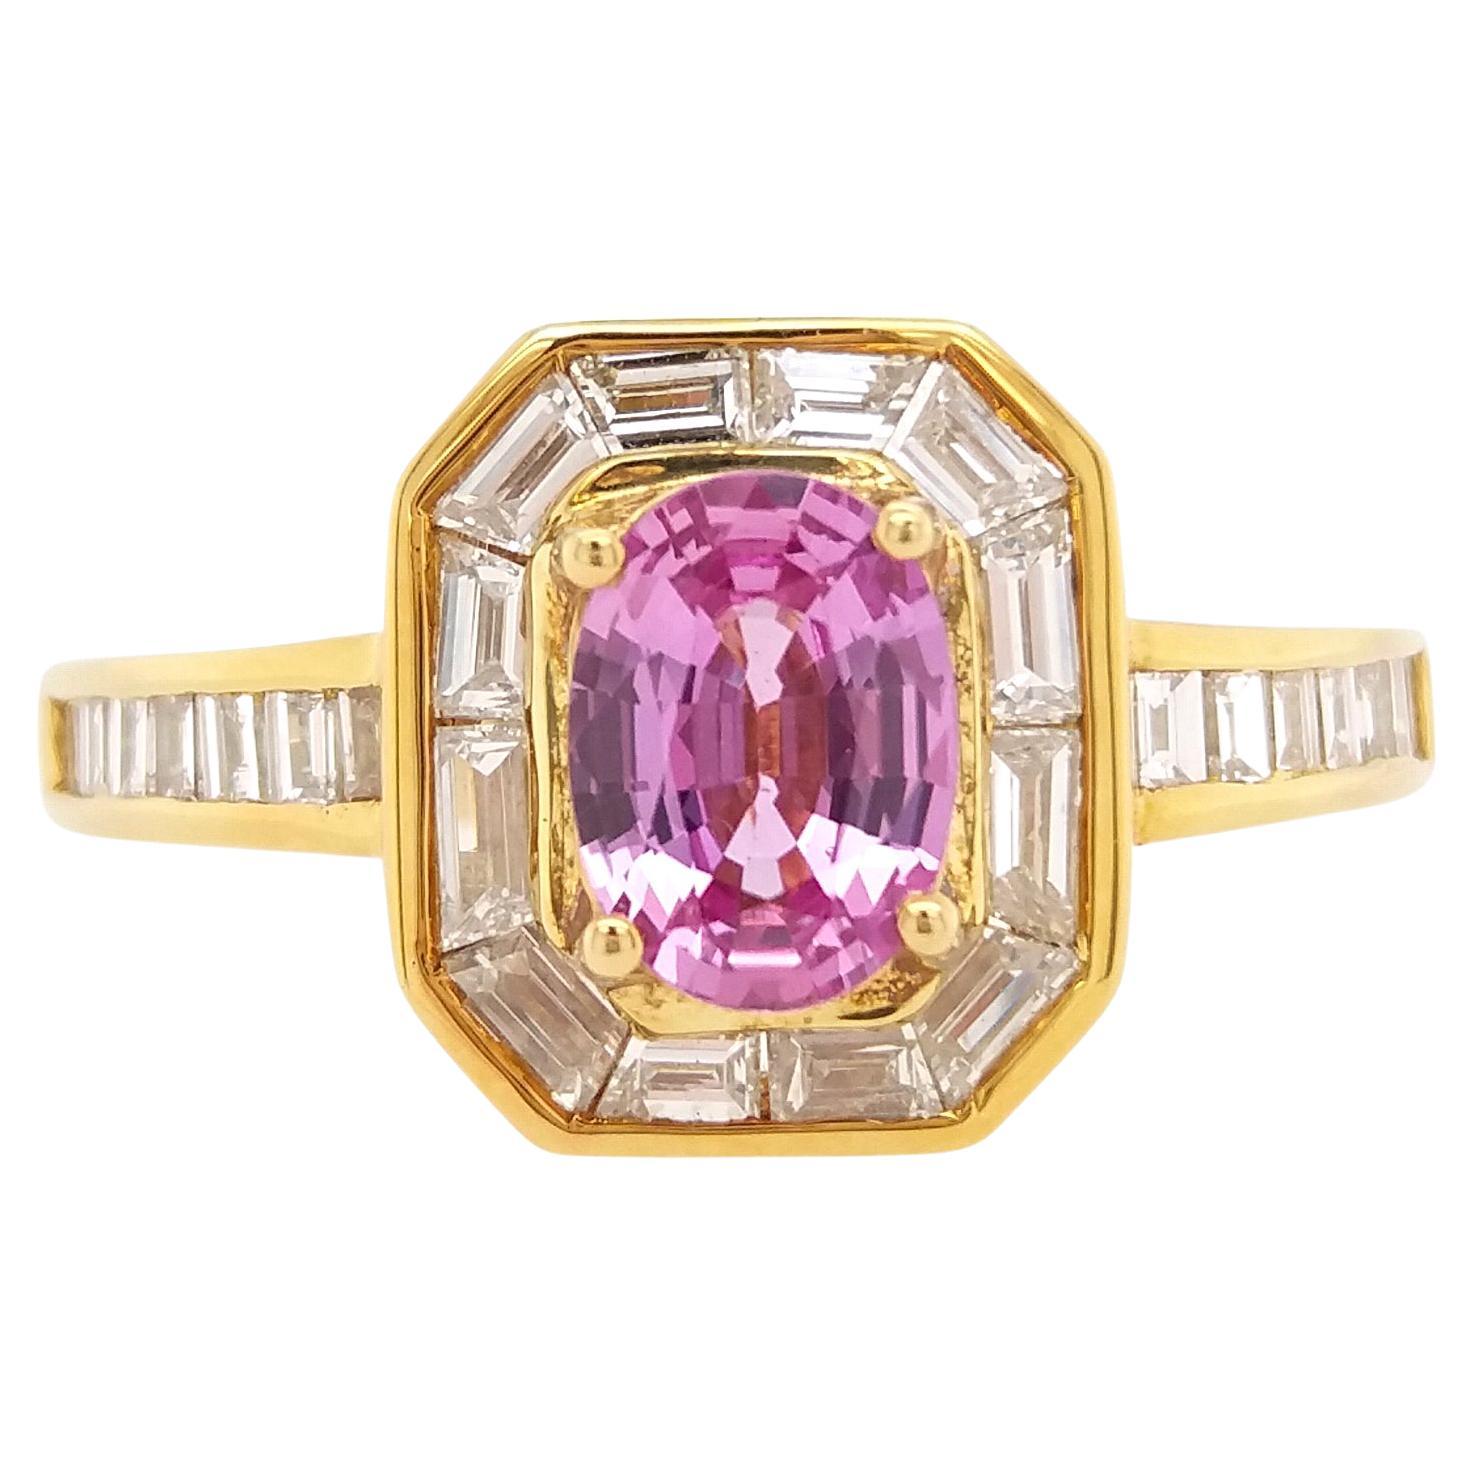 Natural Pink Sapphire White Diamond 18K Gold Engagement Ring